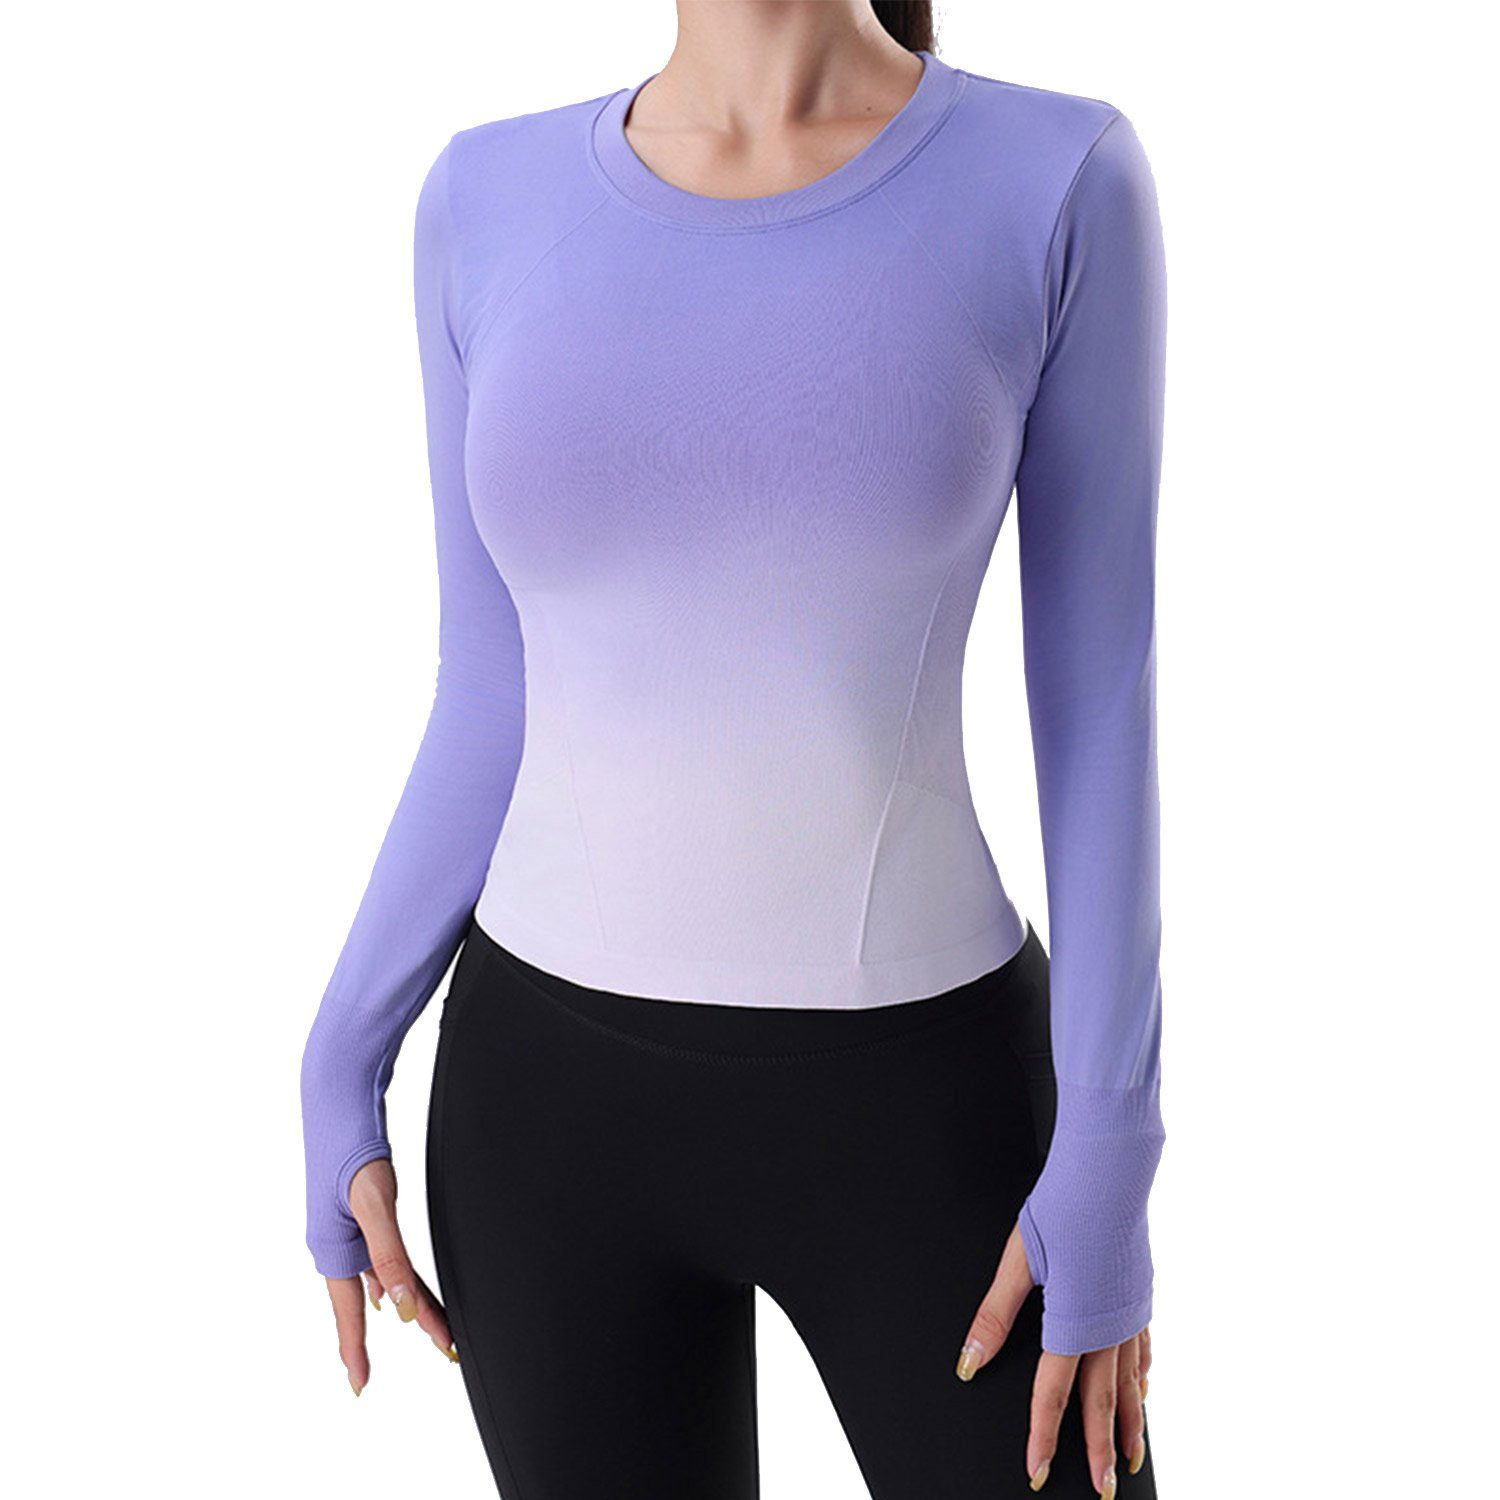 MAGICSHE Trainingsshirt Damen Sport Top mit Daumenlöchern Tanktops Eng sitzendes Sport T-Shirt für Yoga und Fitness lila1